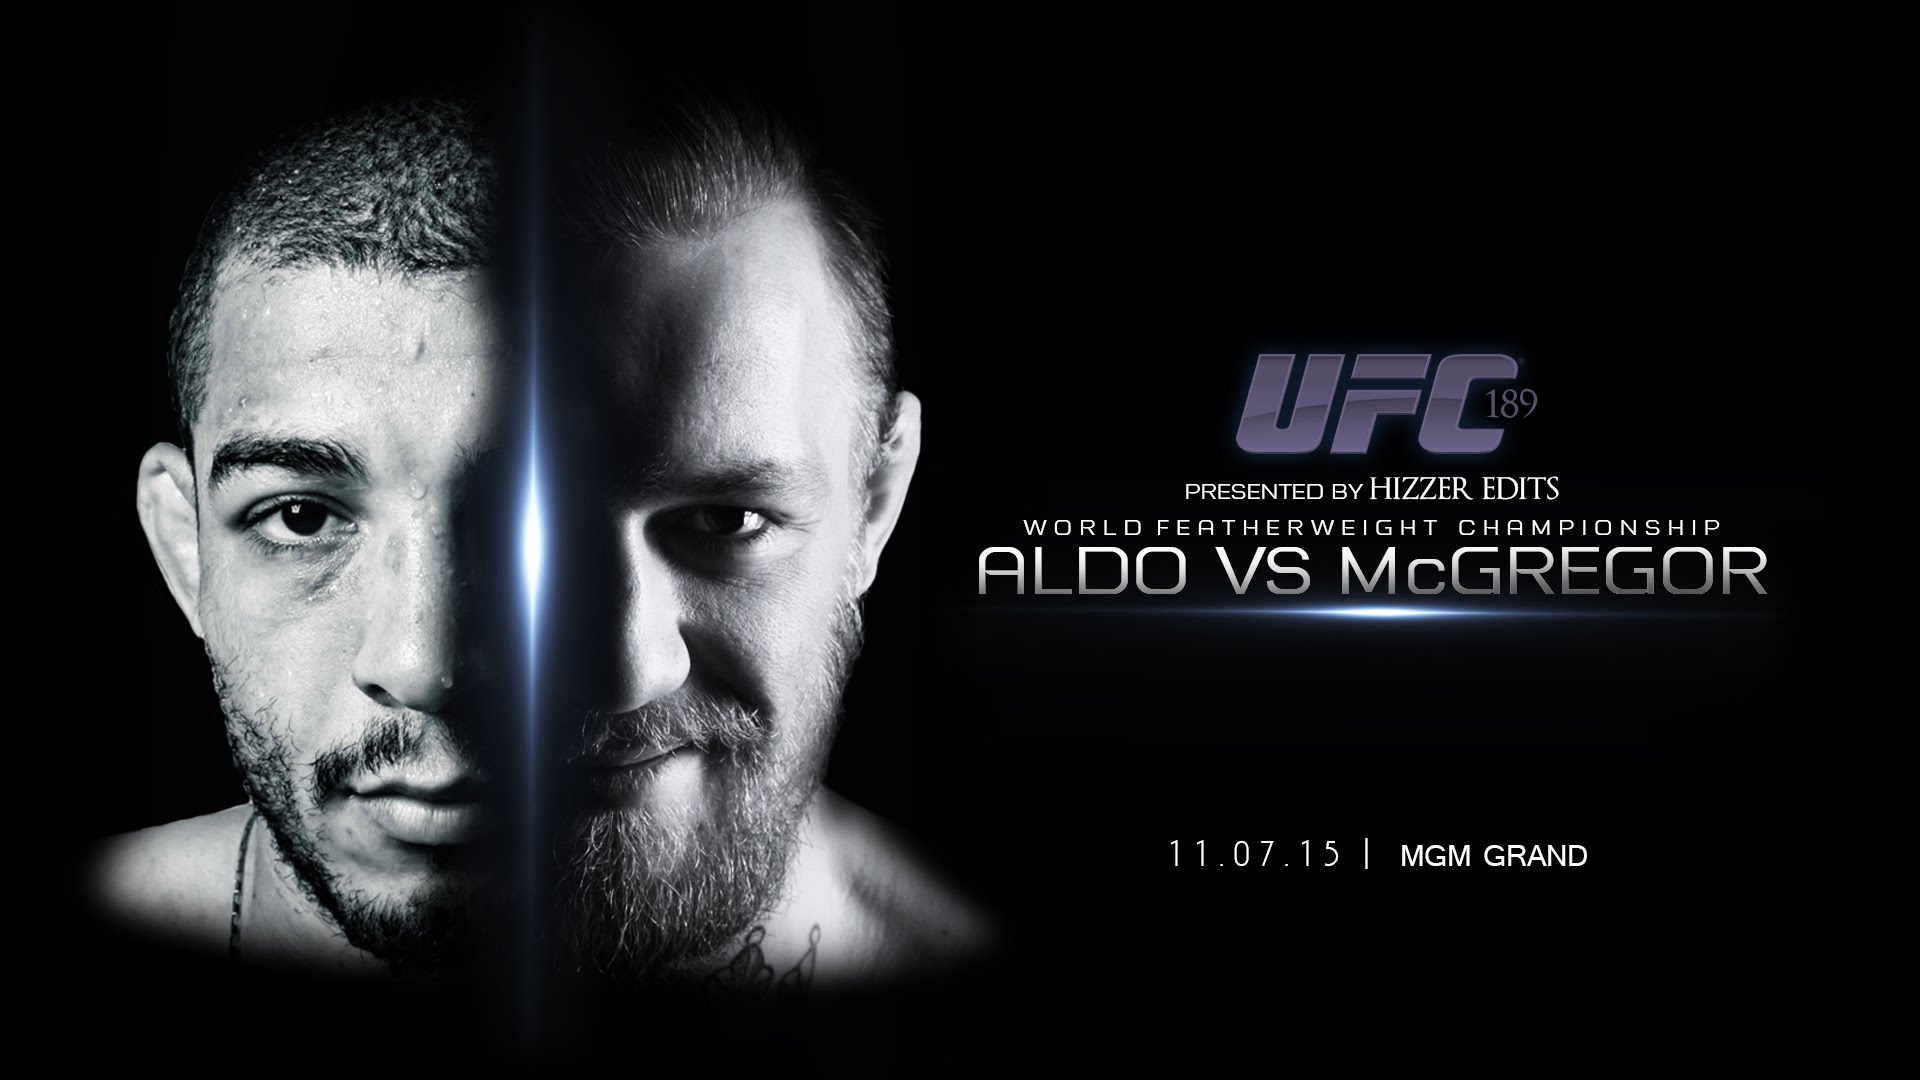 Video â€“ New UFC 189: Aldo vs McGregor Fan Promo